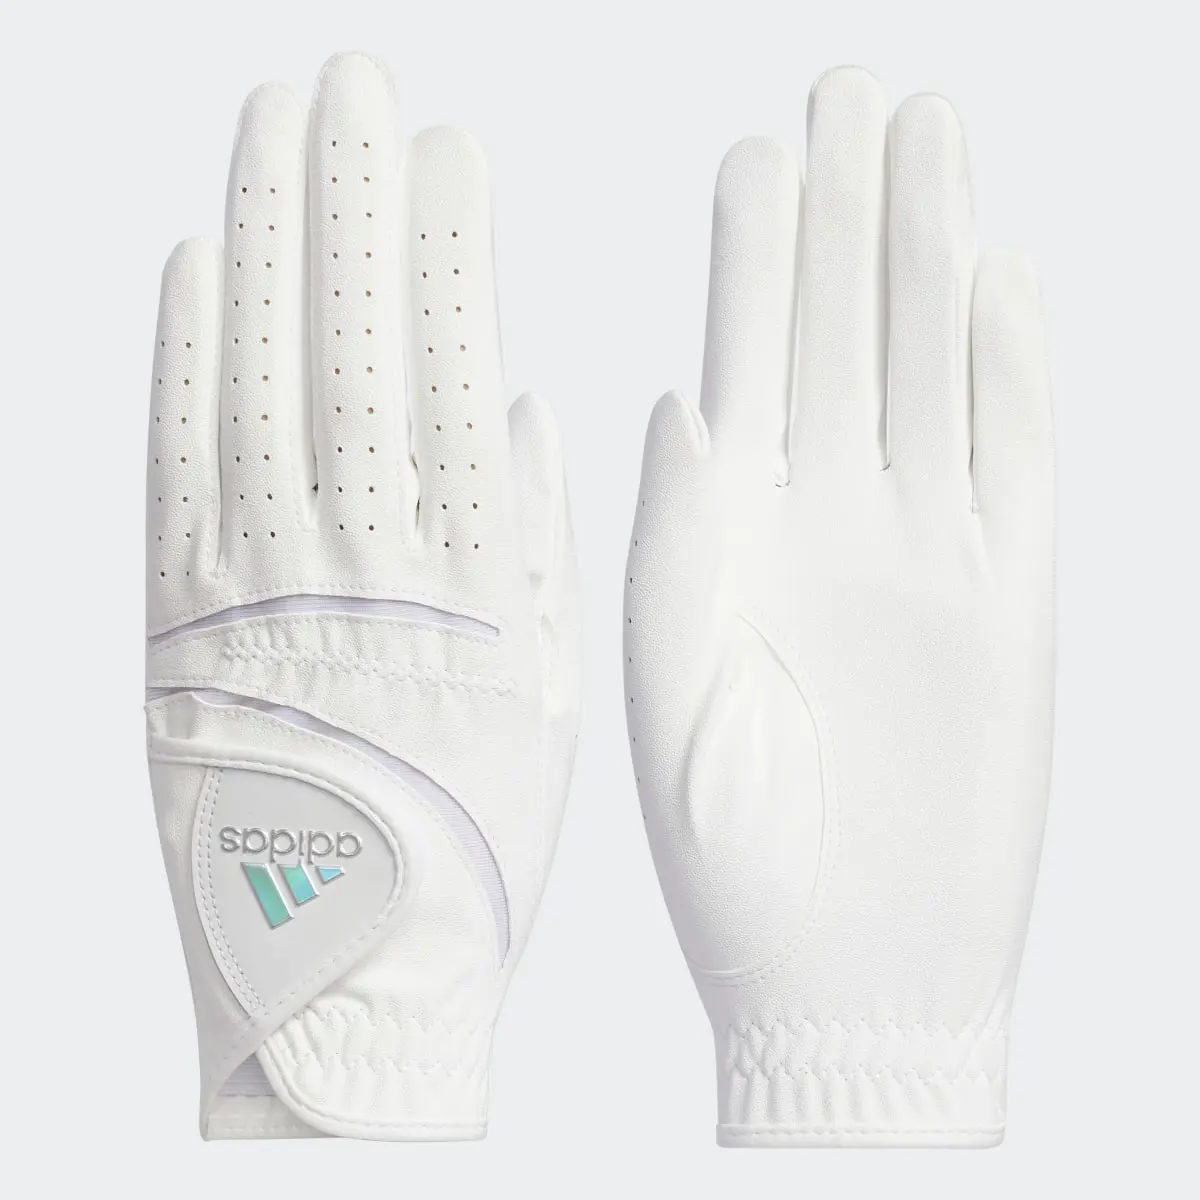 Adidas Light and Comfort Glove. 2